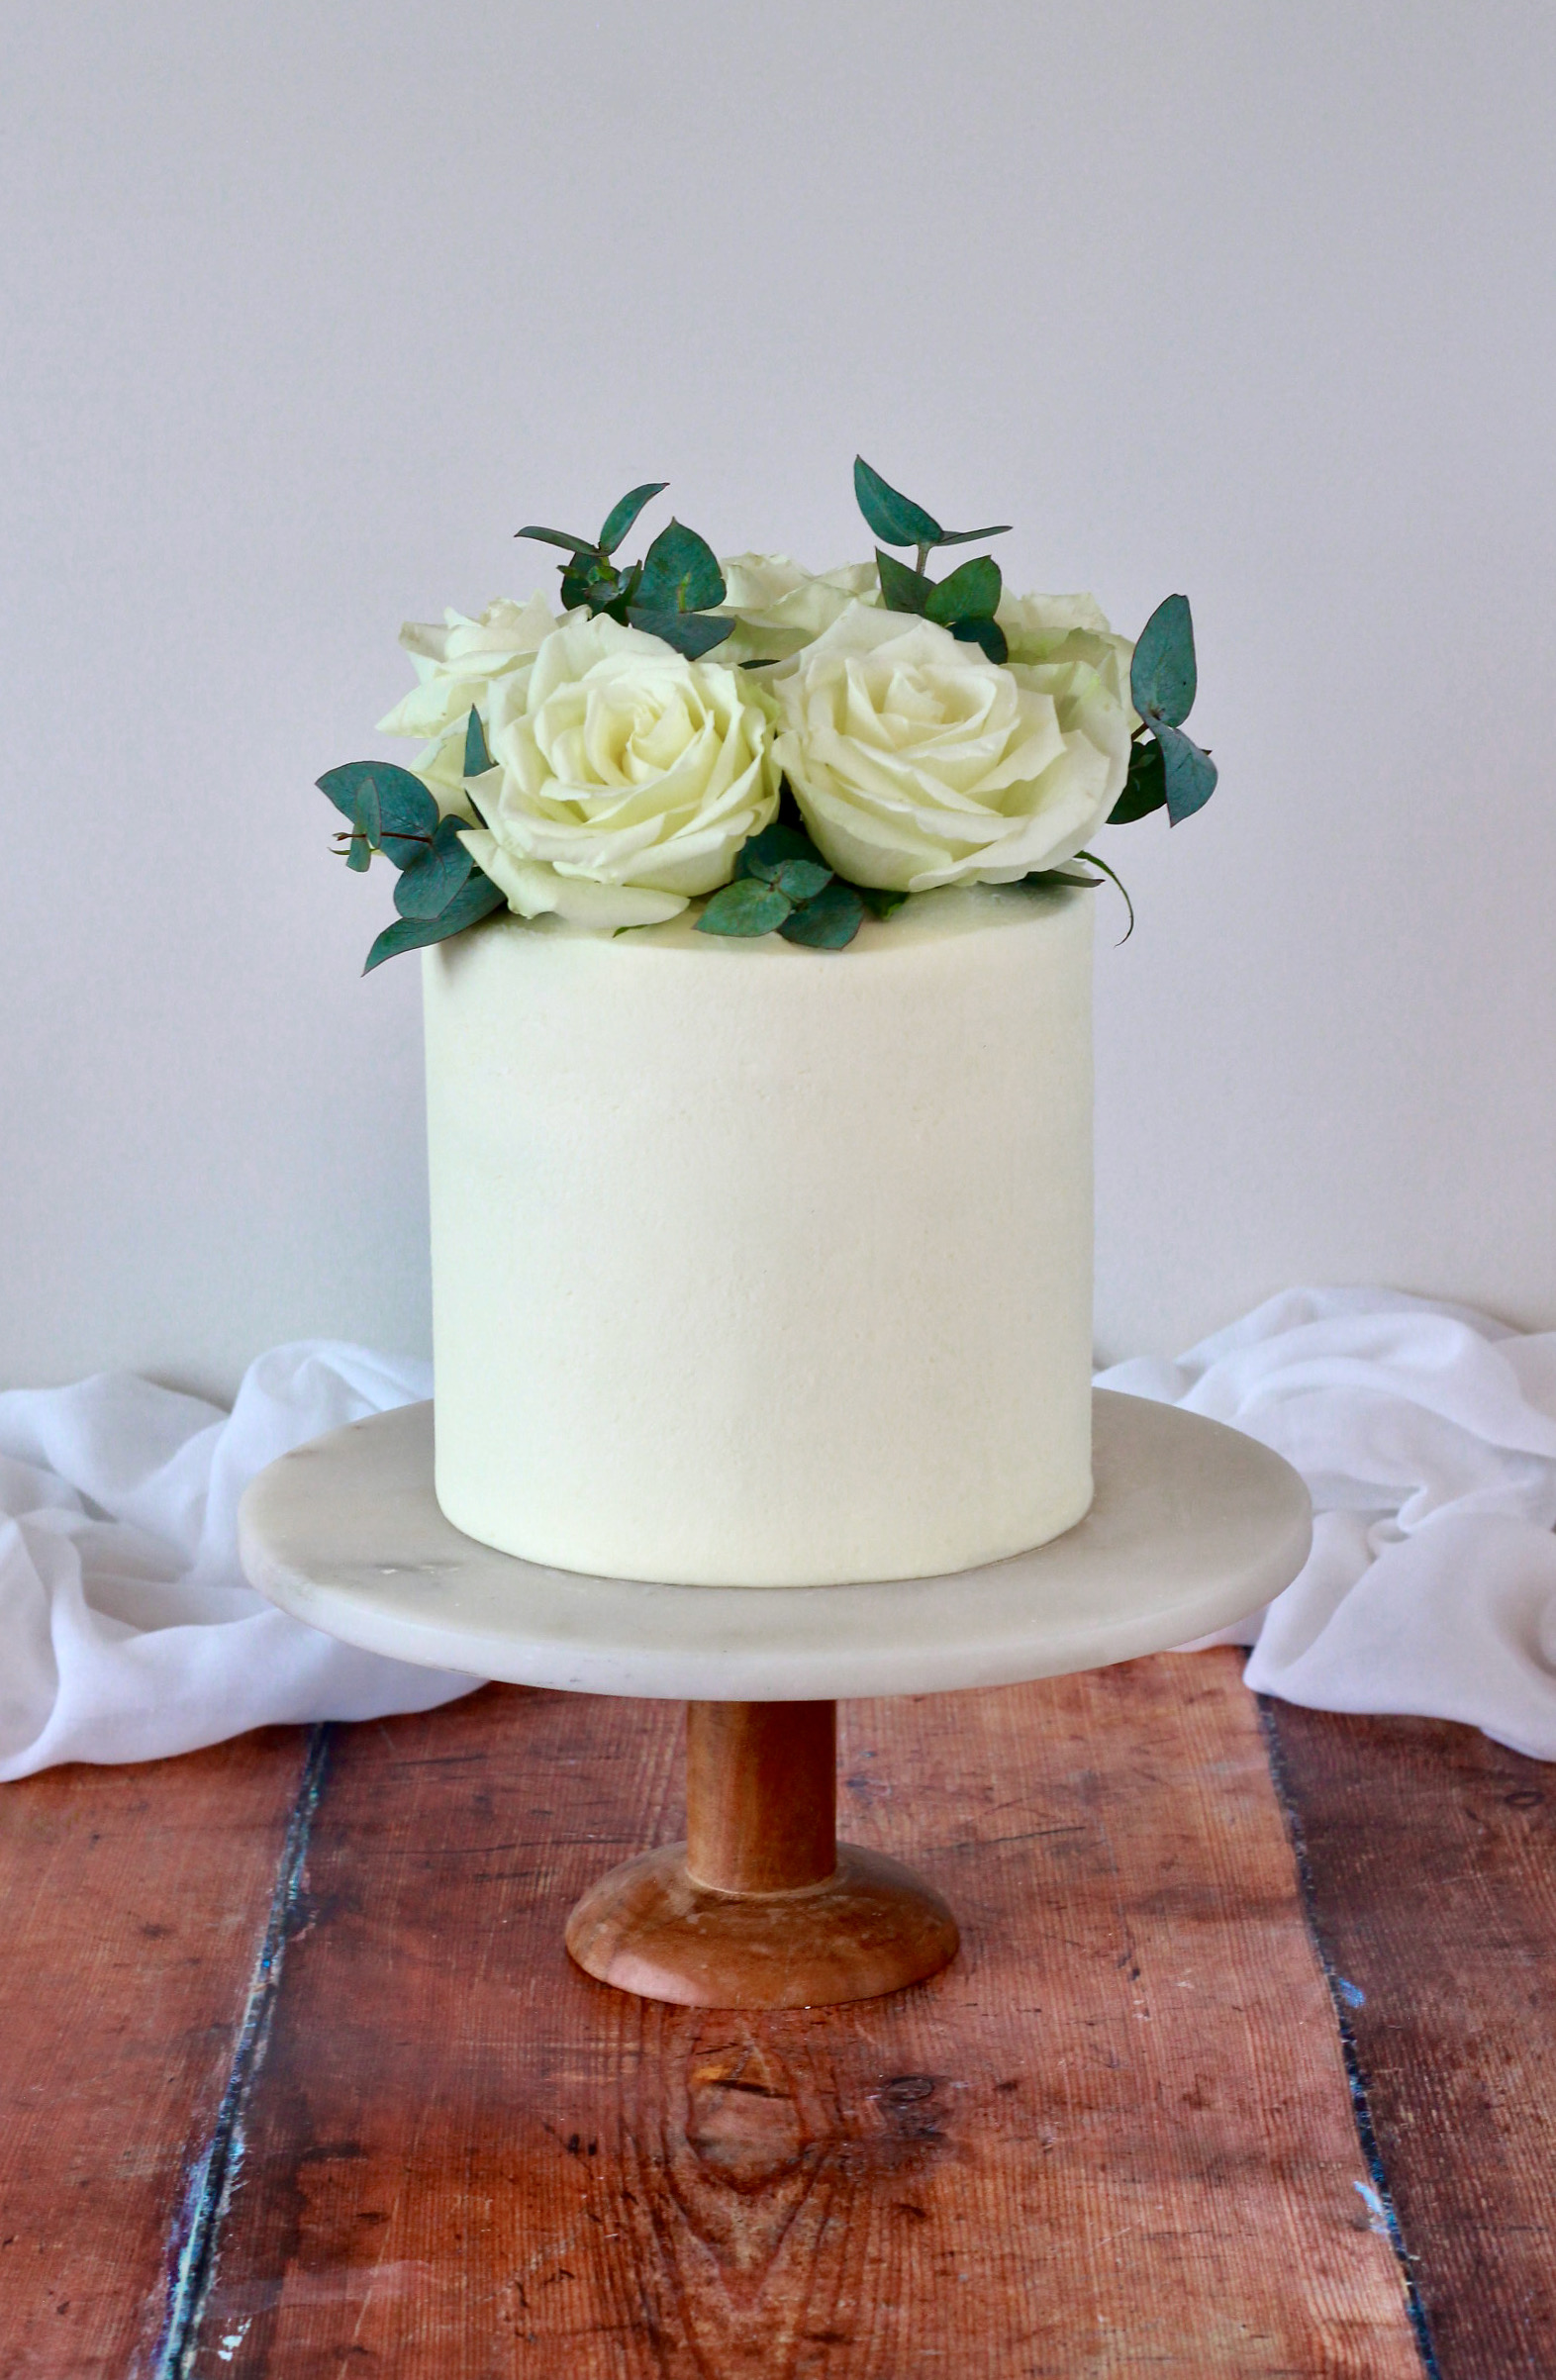 One-tier wedding cake with fresh flowers